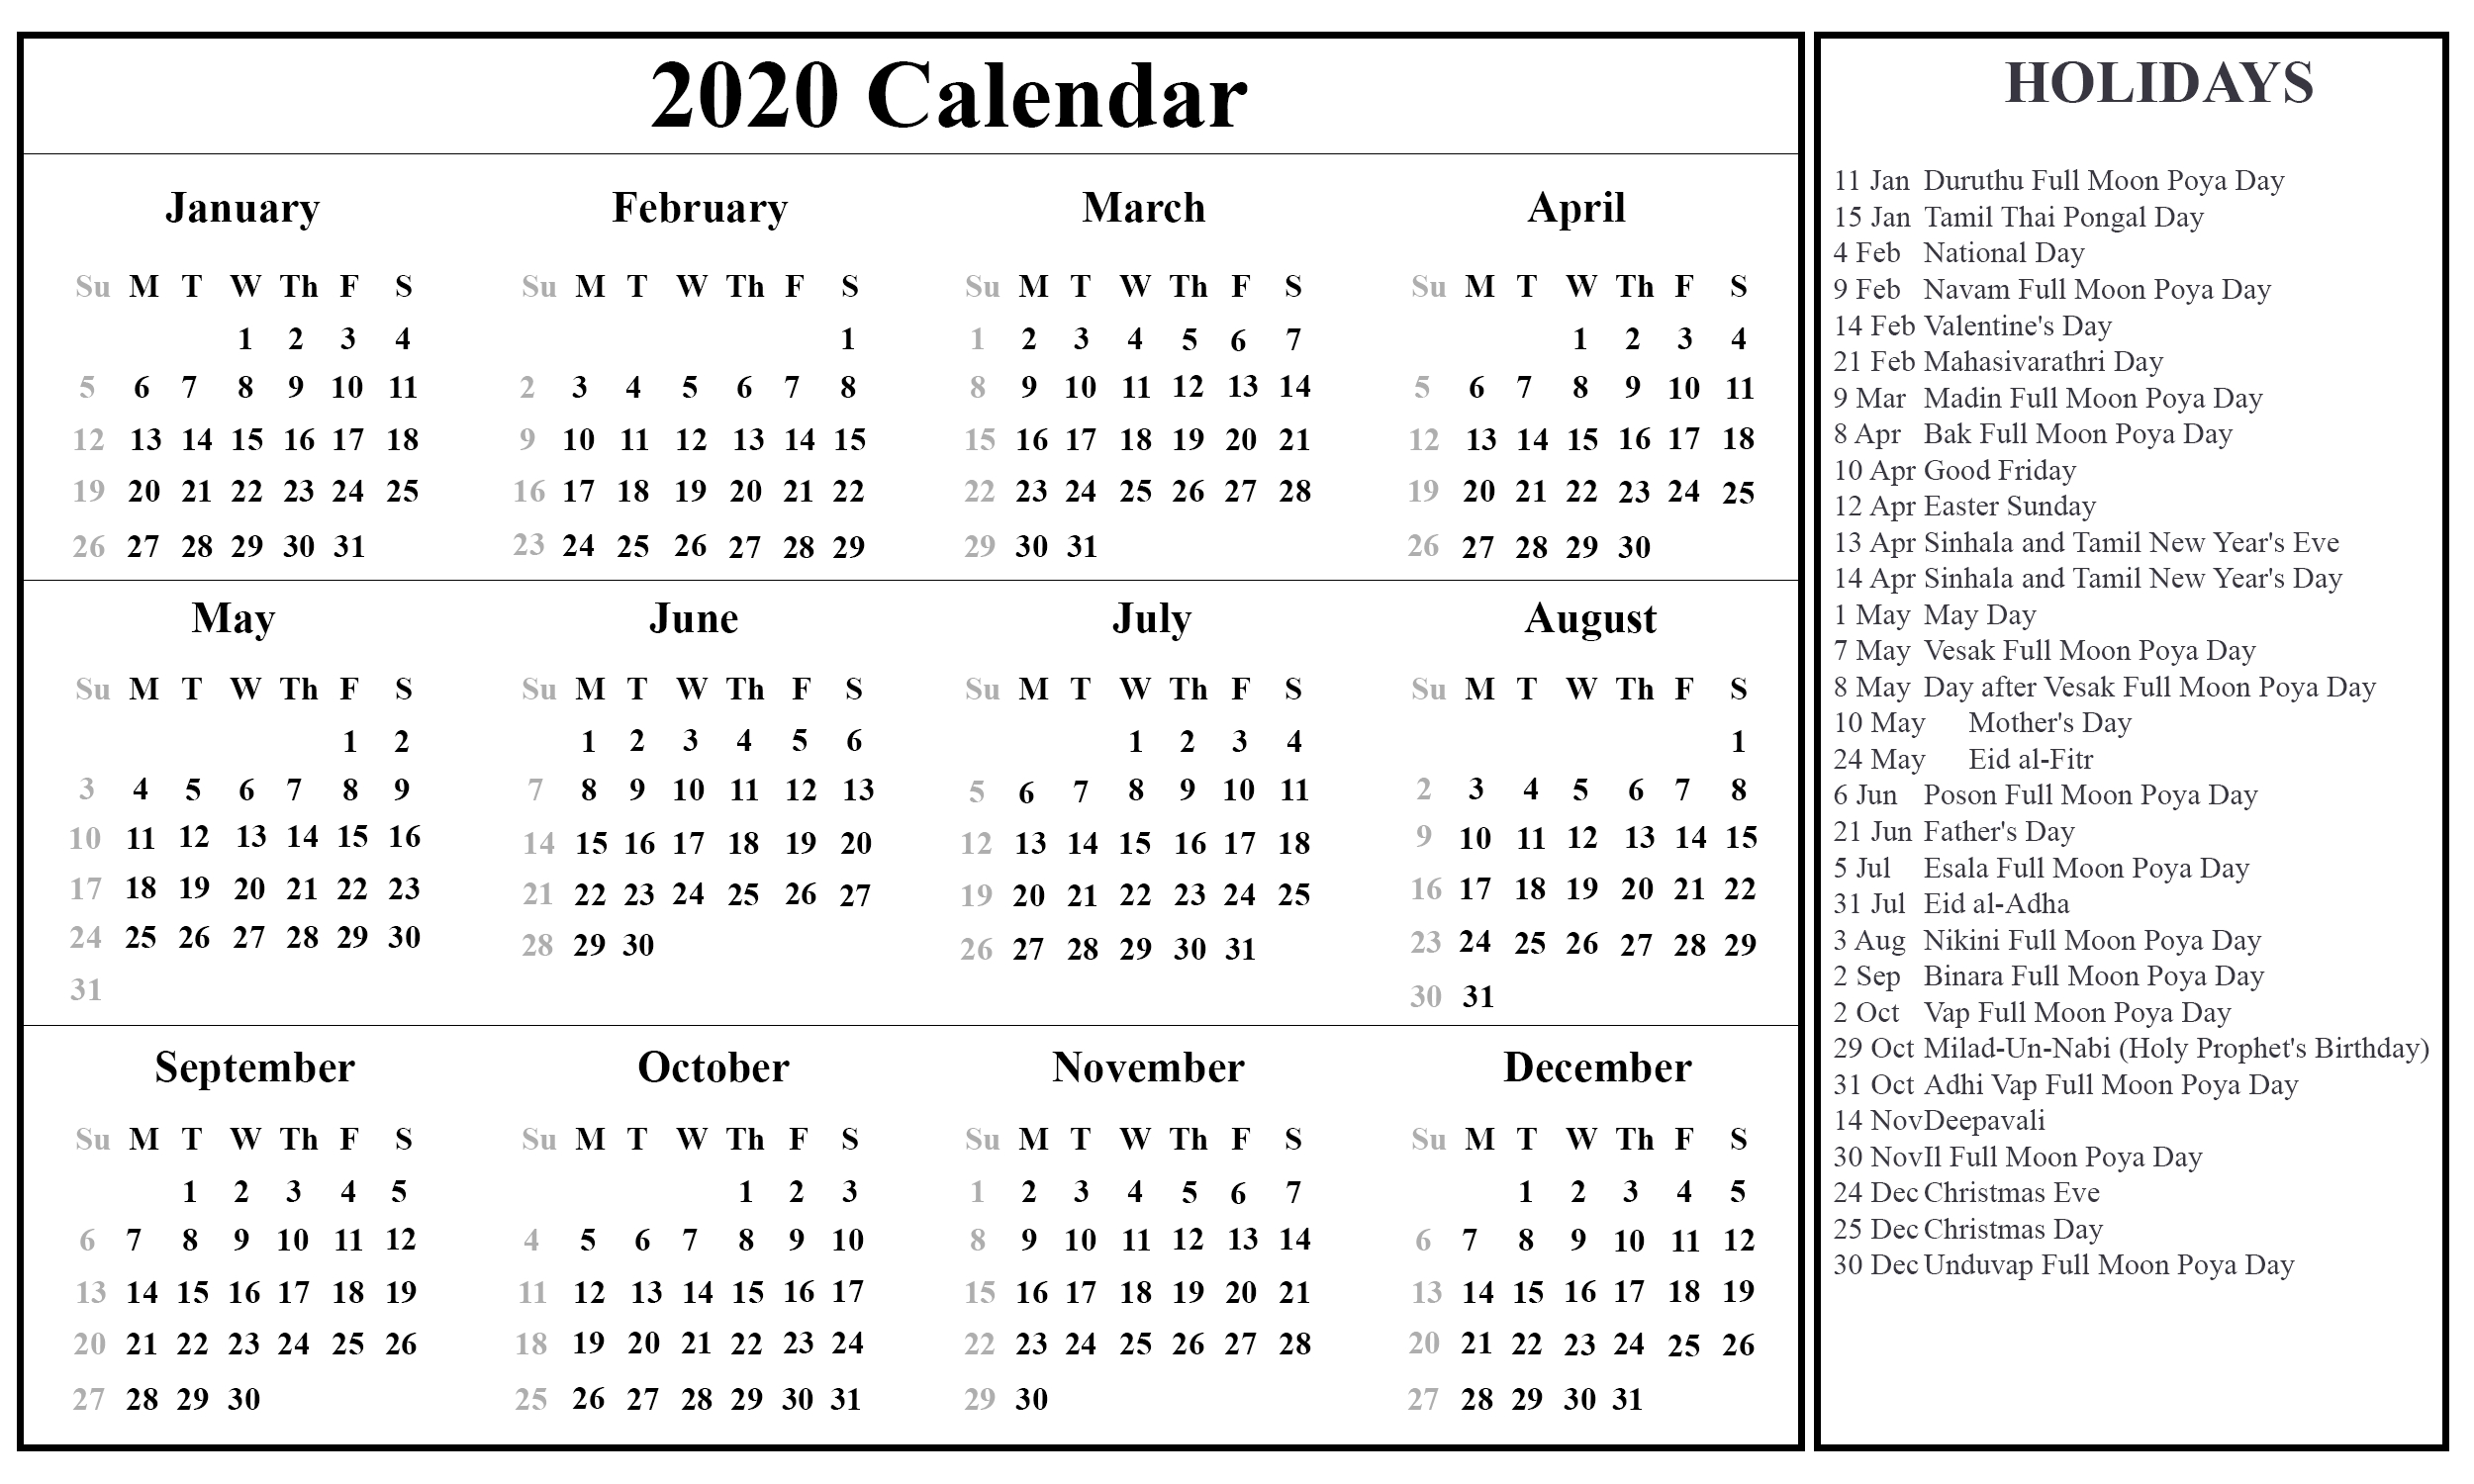 Free Printable Sri Lanka Calendar 2020 With Holidays In Pdf-2020 Islamic Calendar Holidays